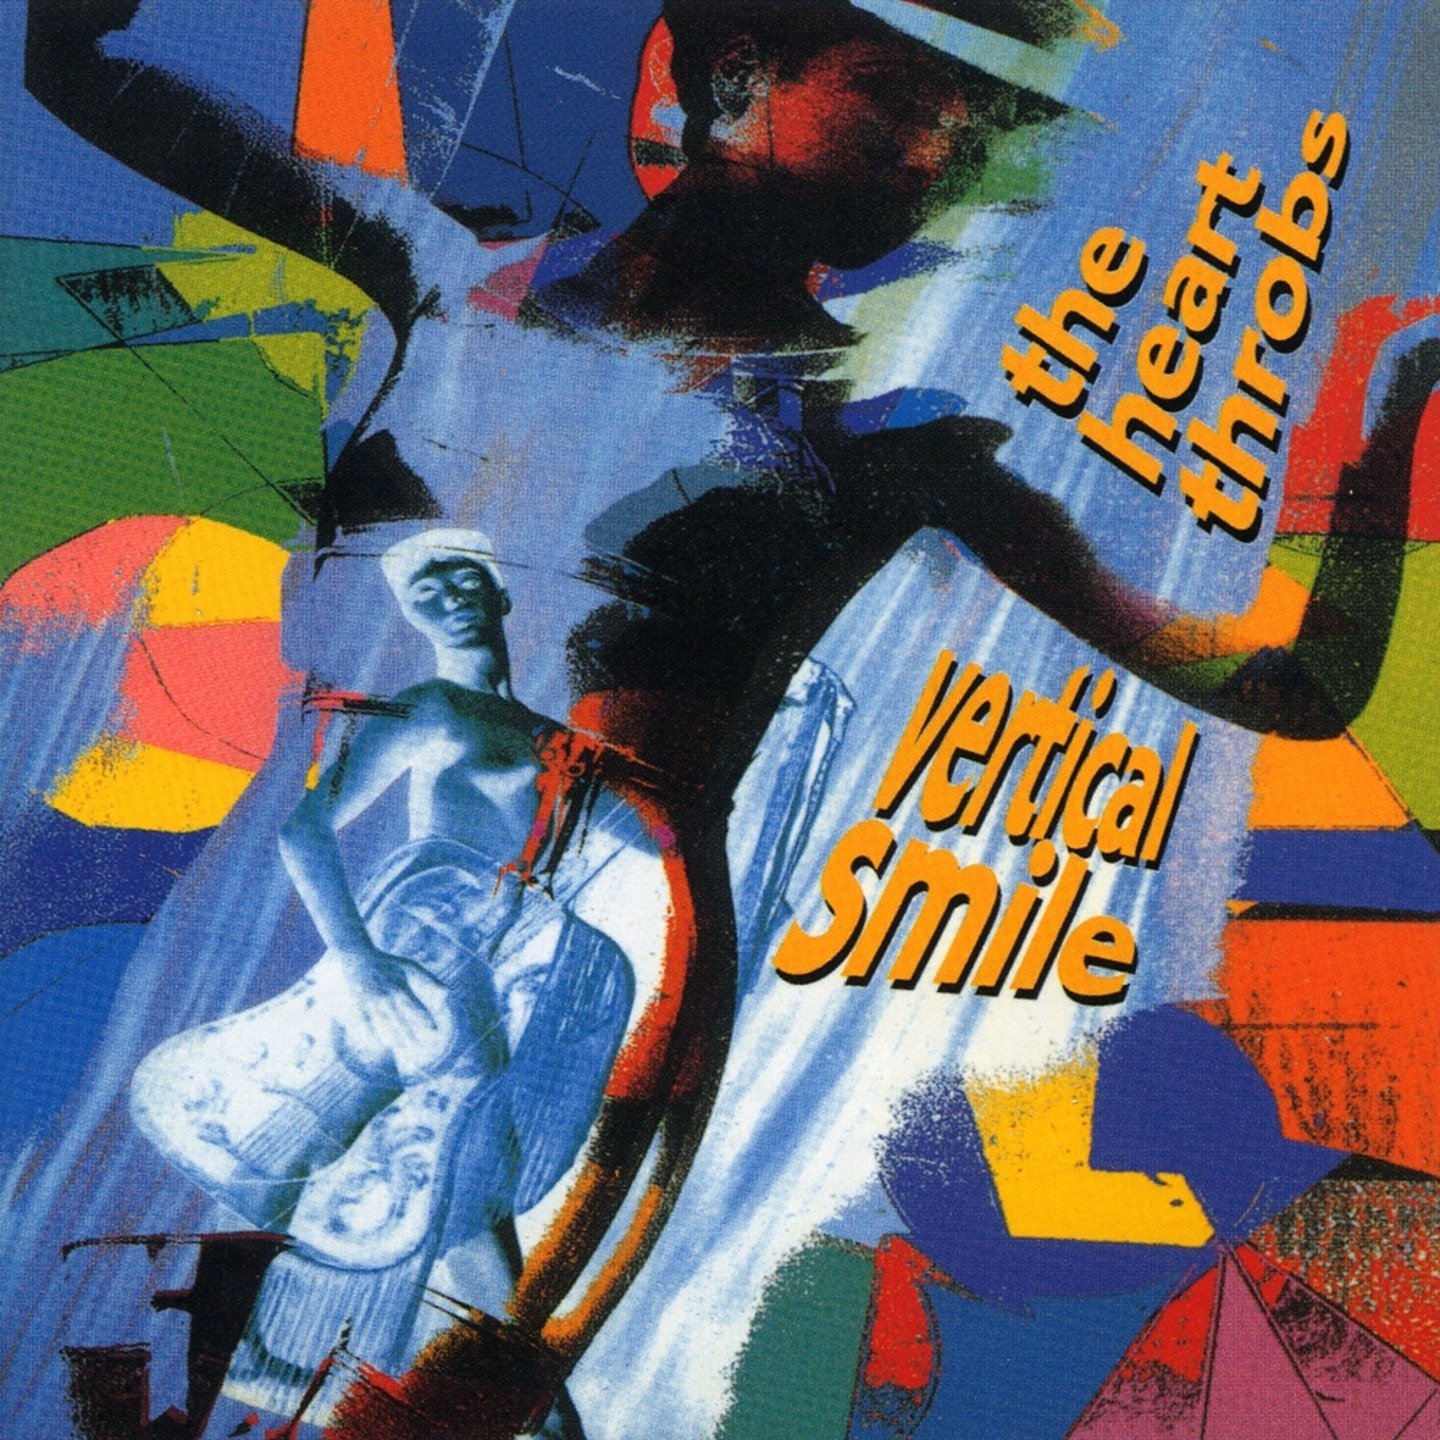 The Heart Throbs-Vertical Smile-CD-FLAC-1993-401